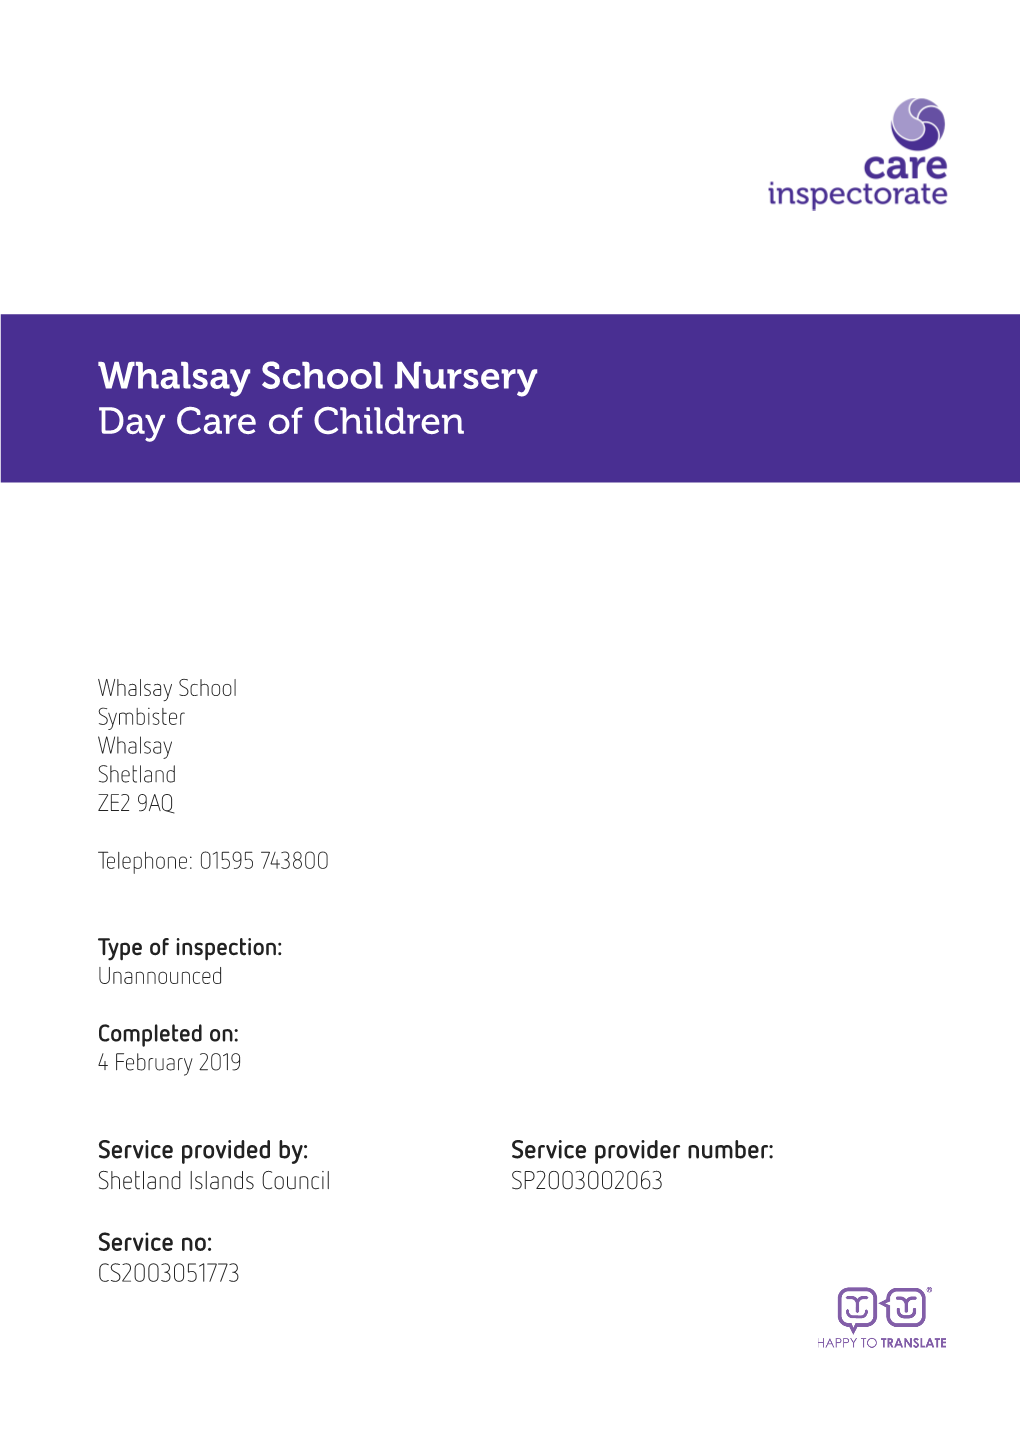 Whalsay School Nursery Day Care of Children